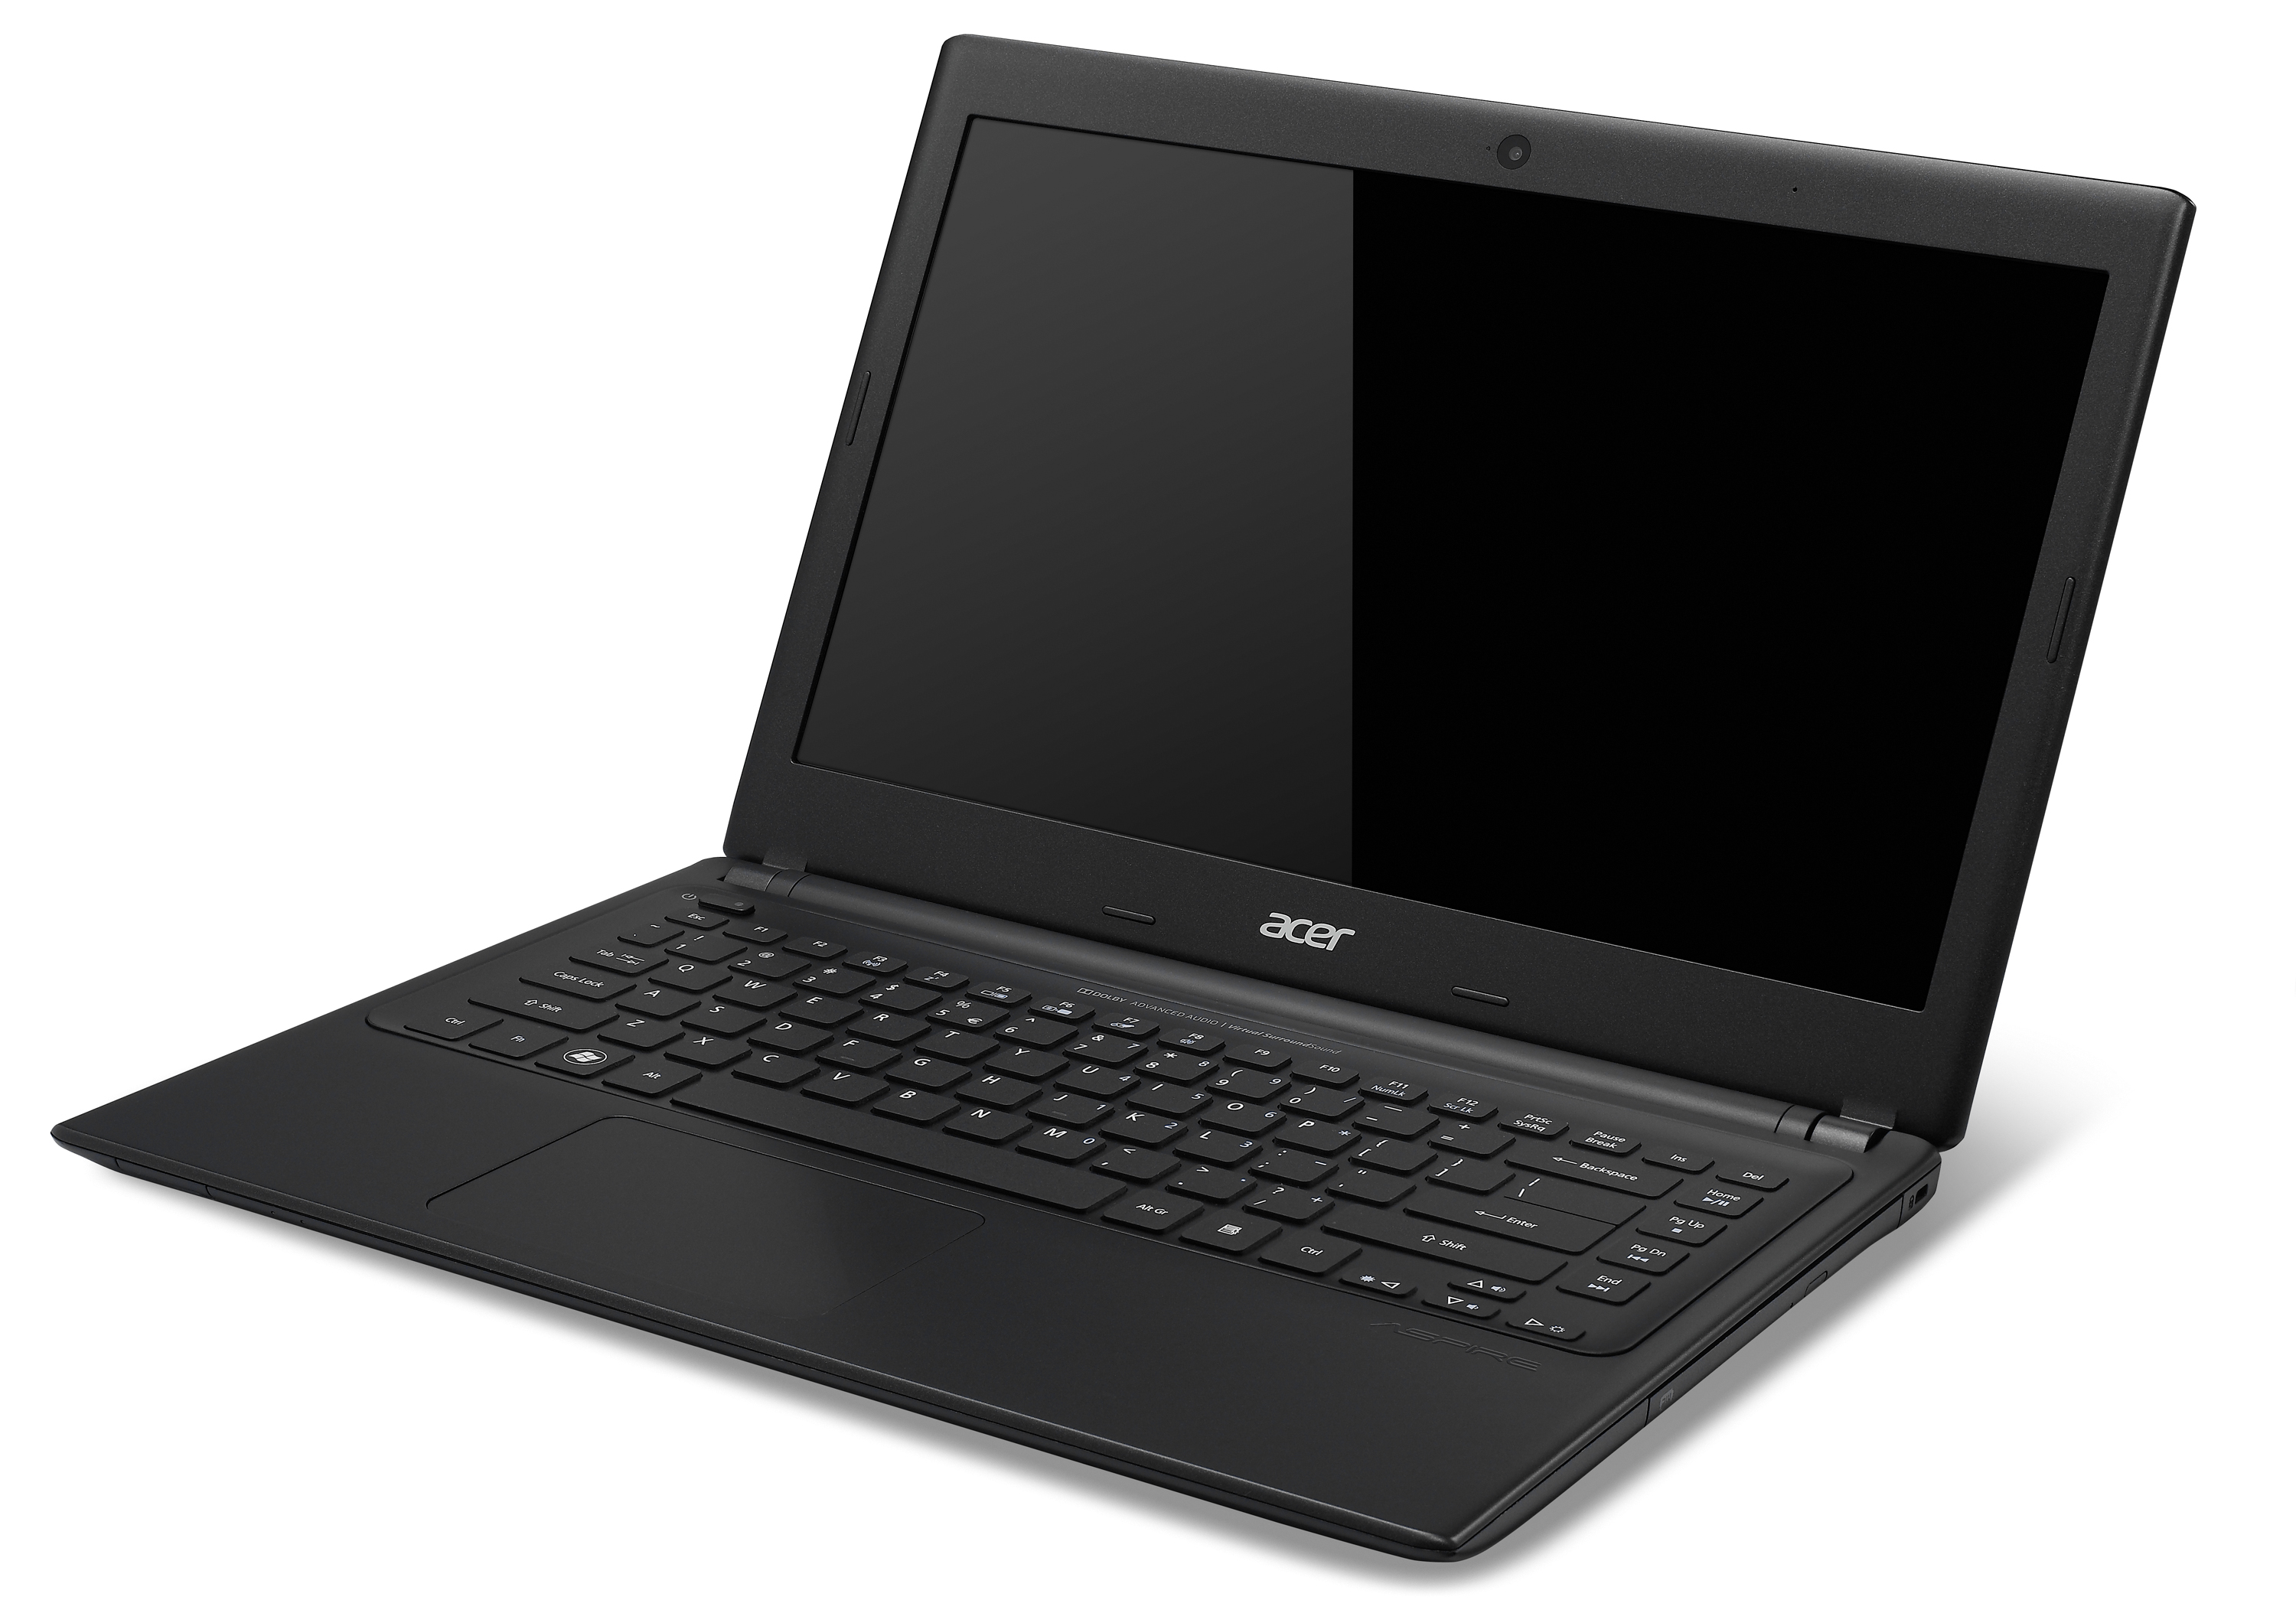 Acer Aspire V5 series features Ivy Bridge and USB 3.0 - SlashGear